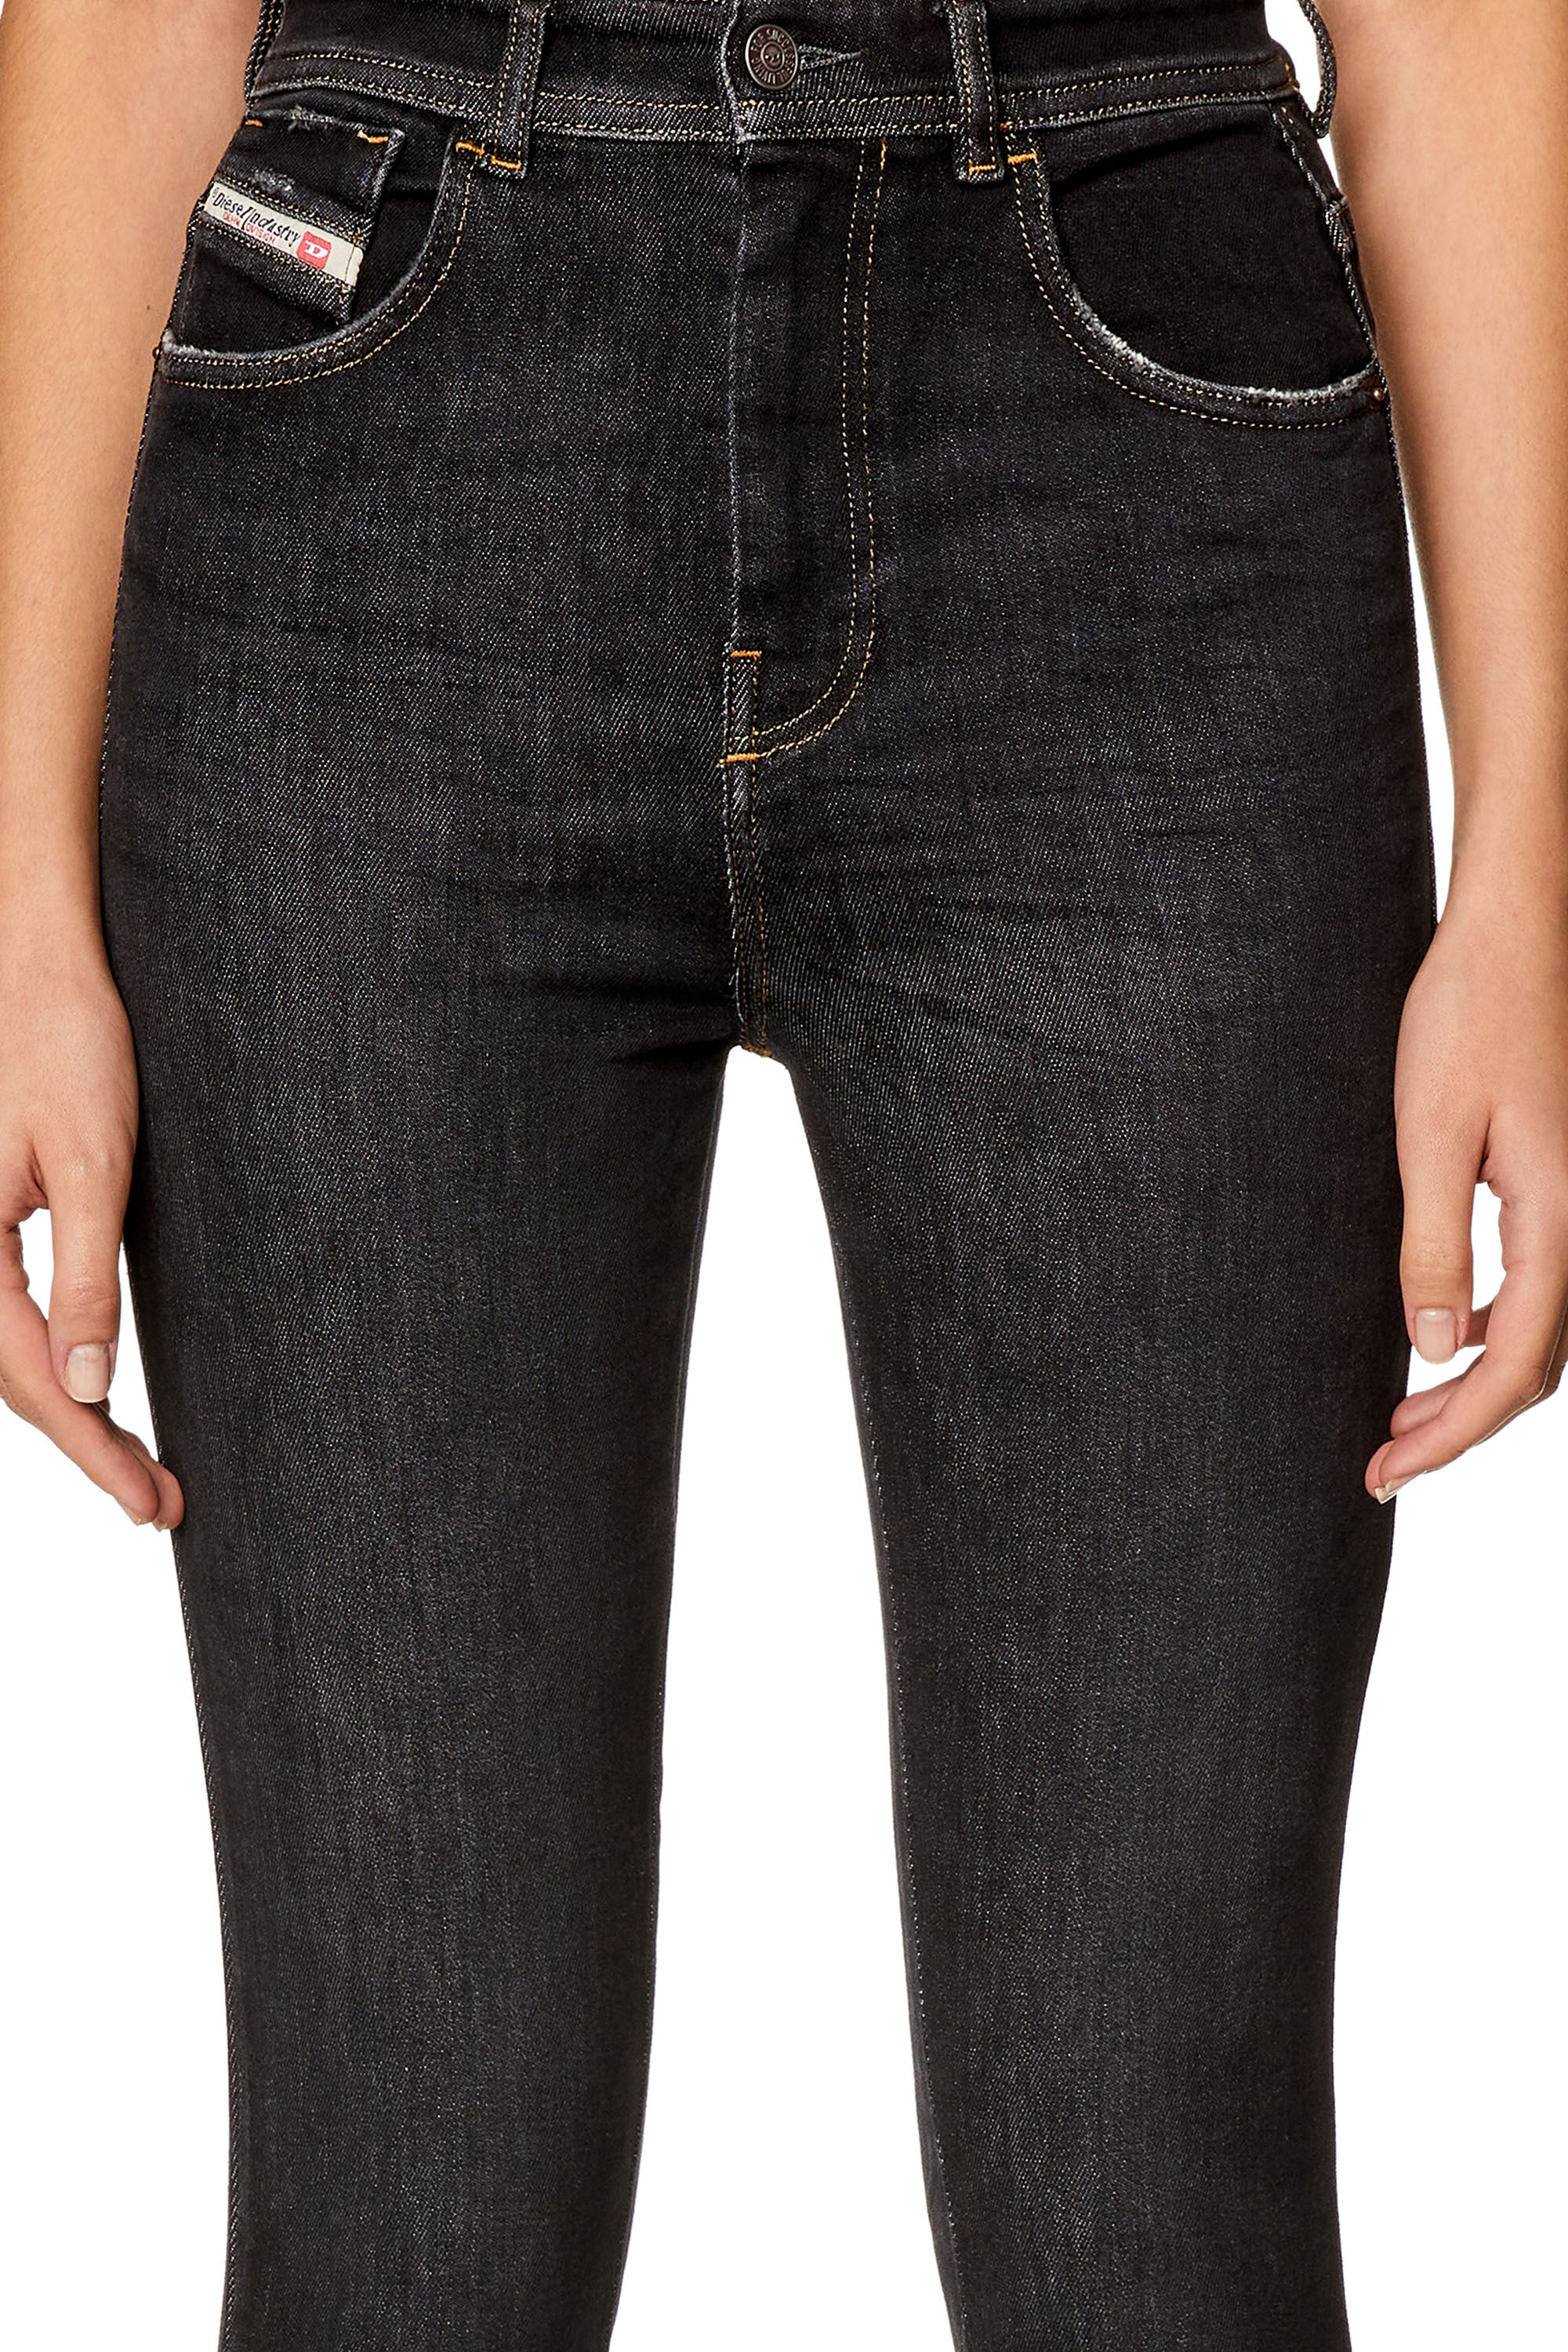 Women's Super skinny Jeans, Black/Dark grey